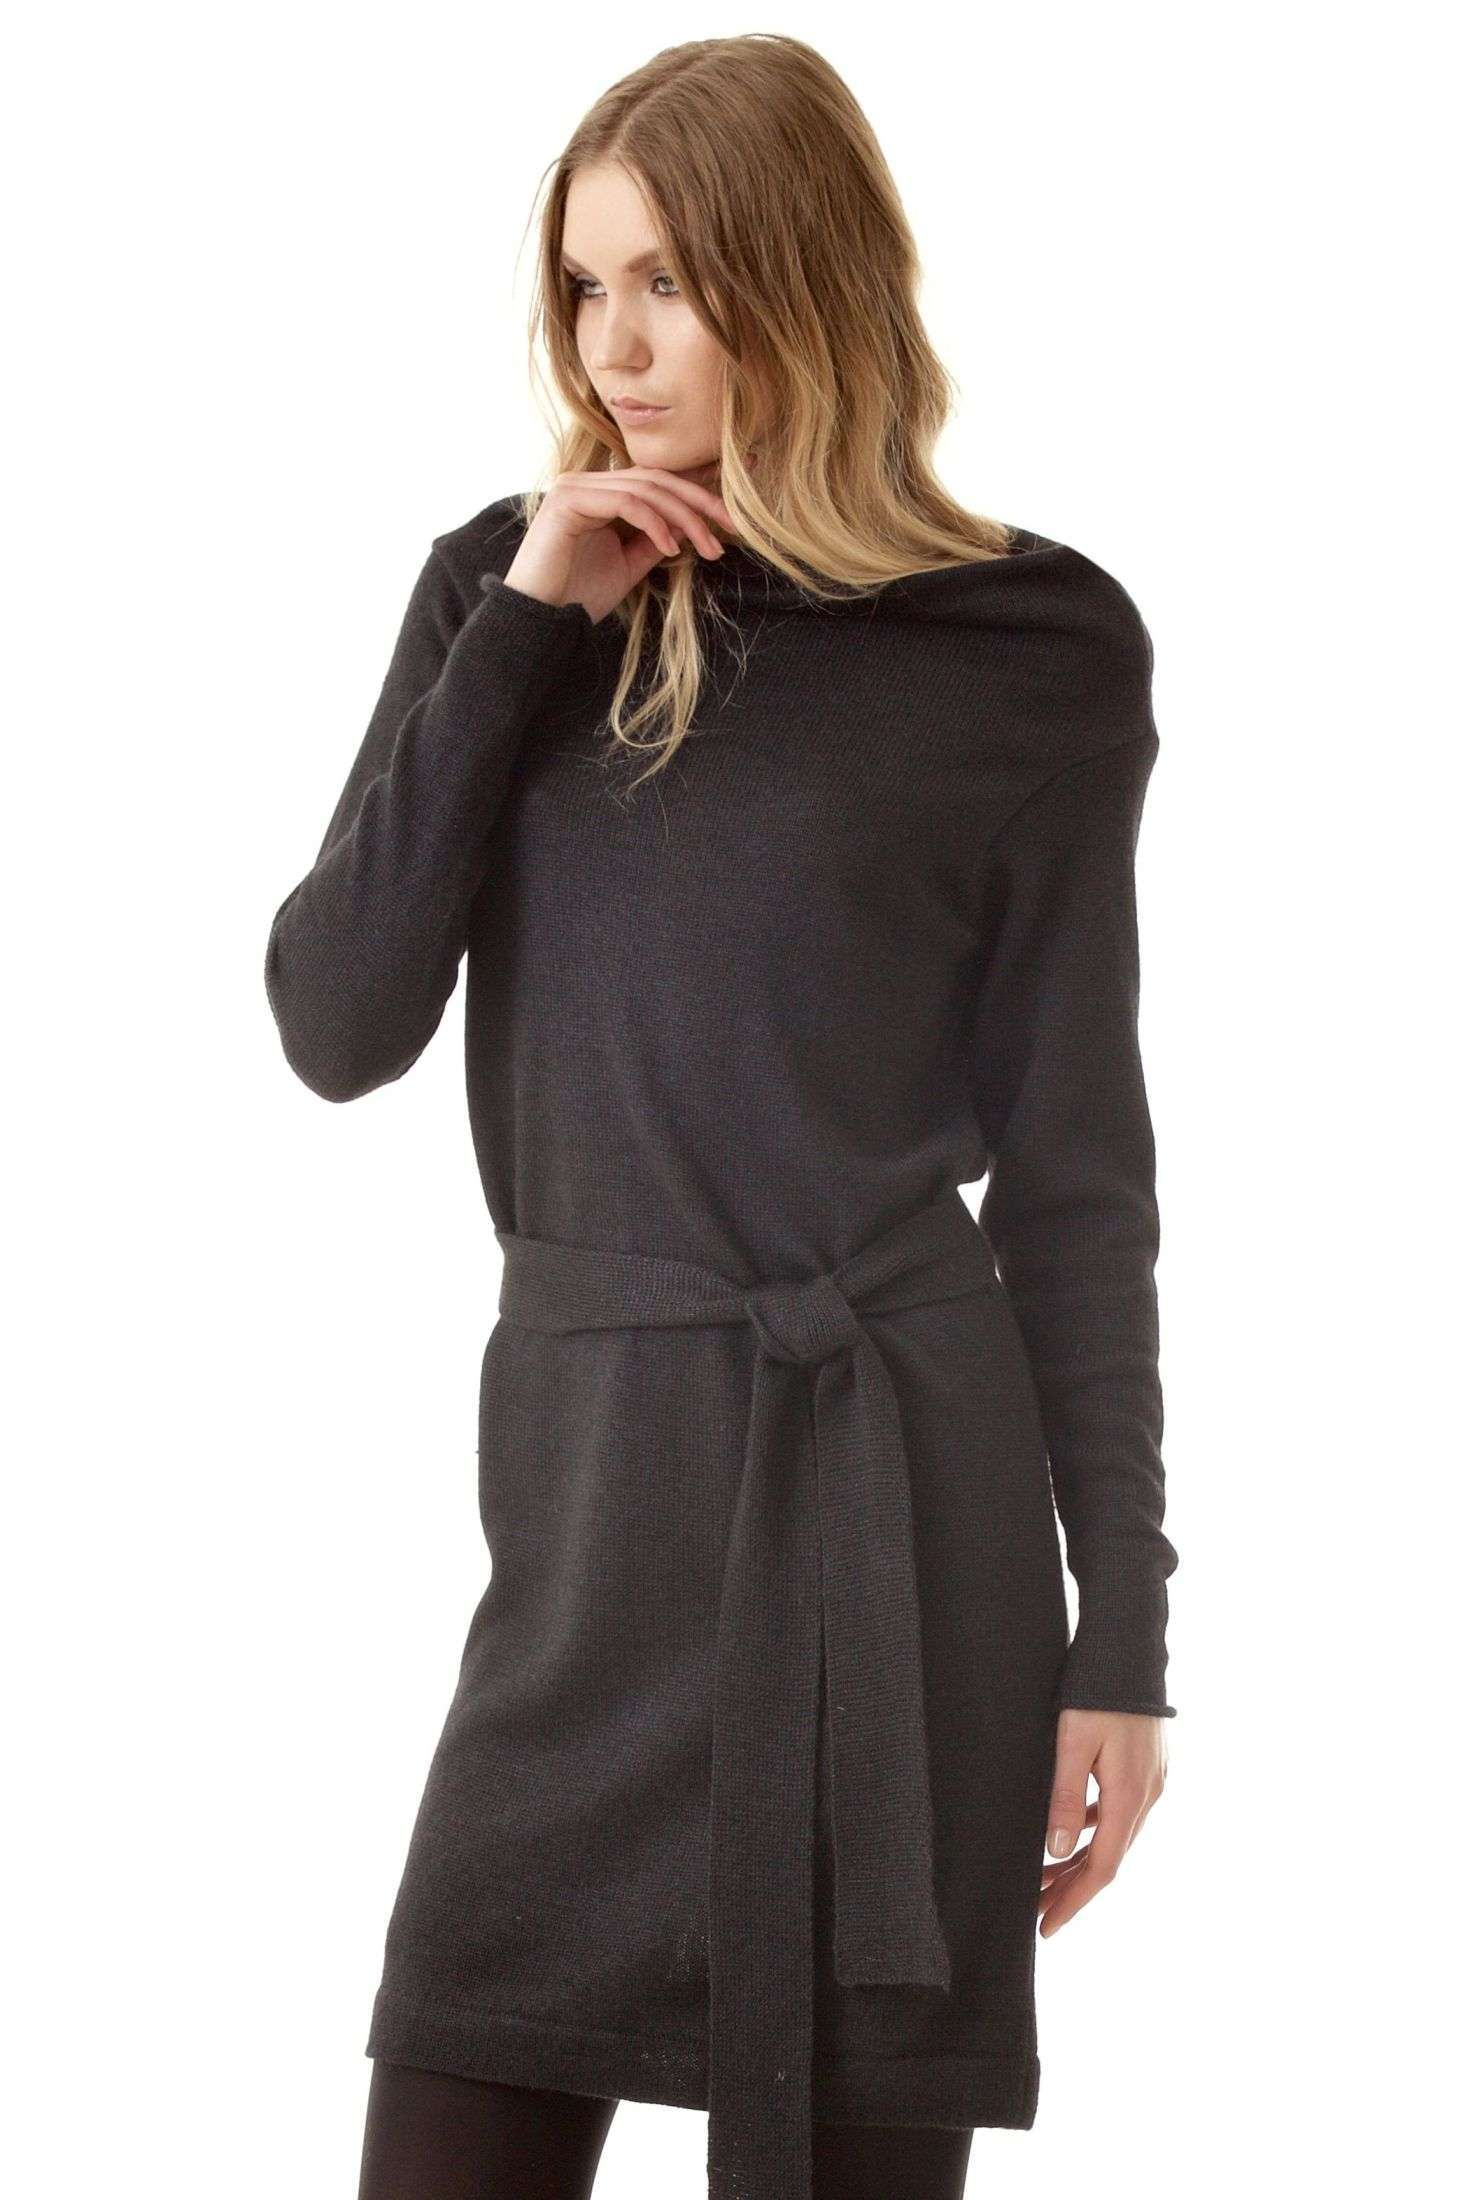 Black knit draped dress PATRICIA made of 100% alpaca wool